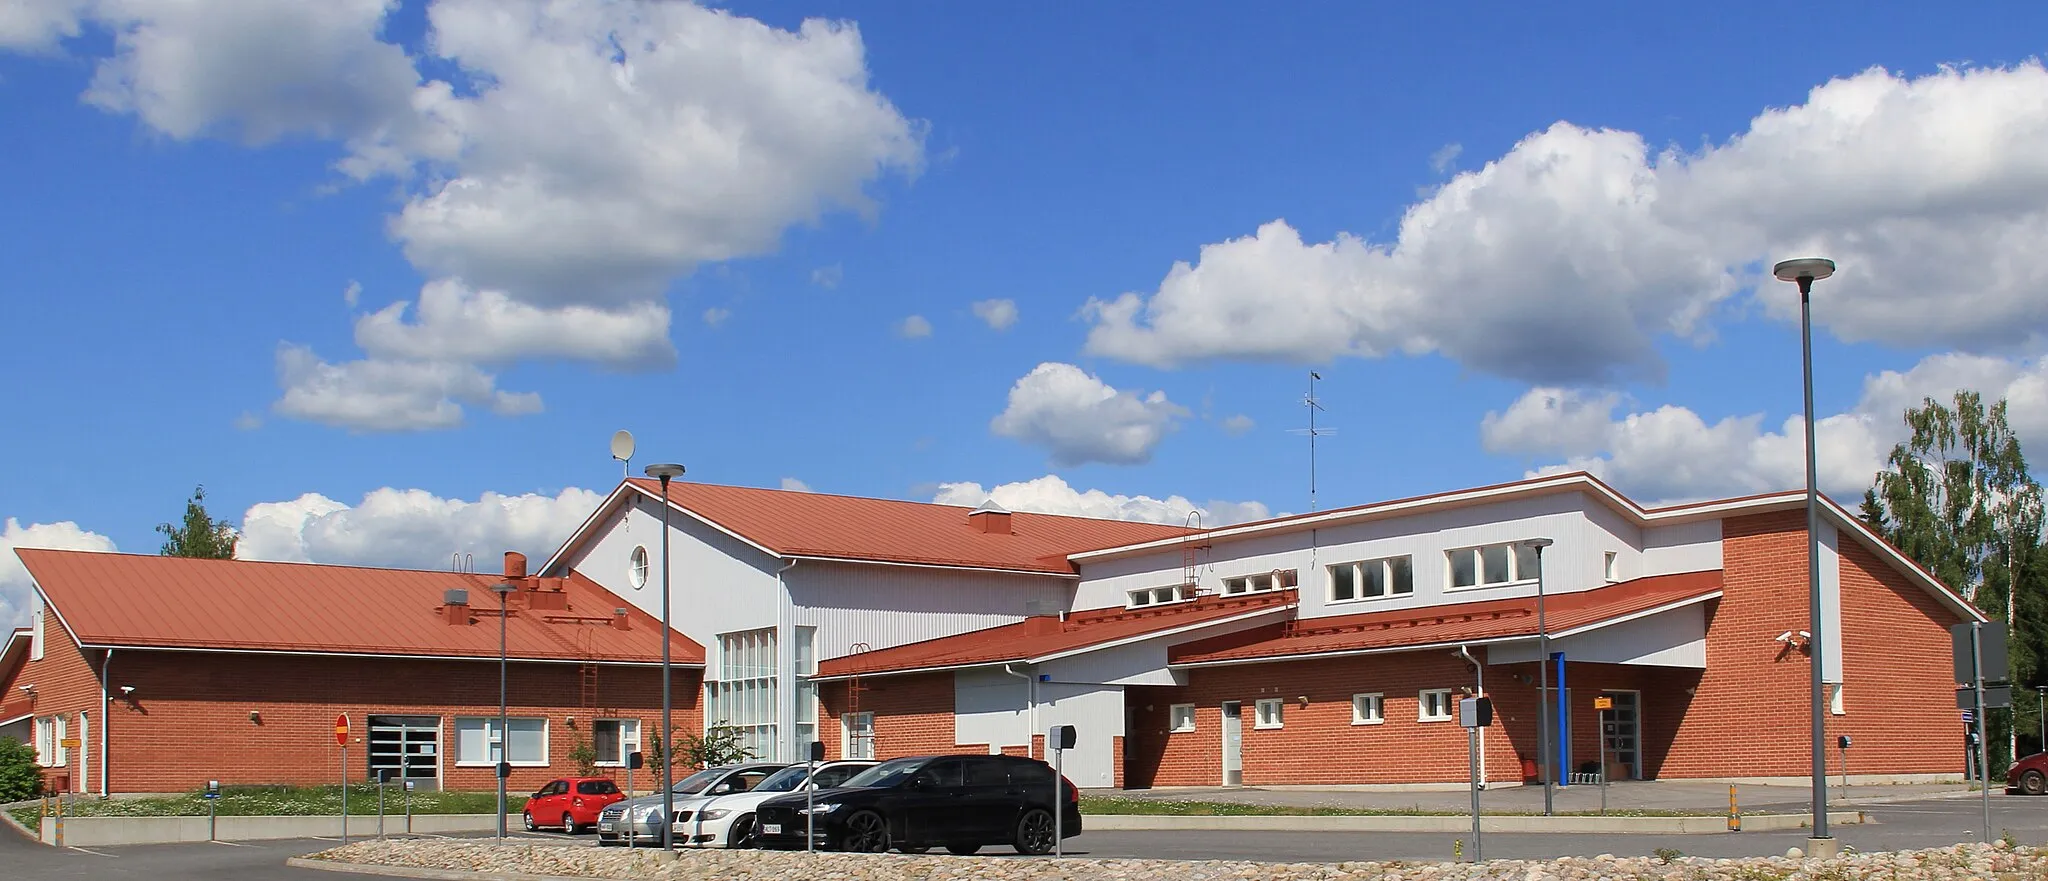 Photo showing: Ganander primary school, Rantsila, Siikalatva, Finland. - School was named after priest Christfried Ganander